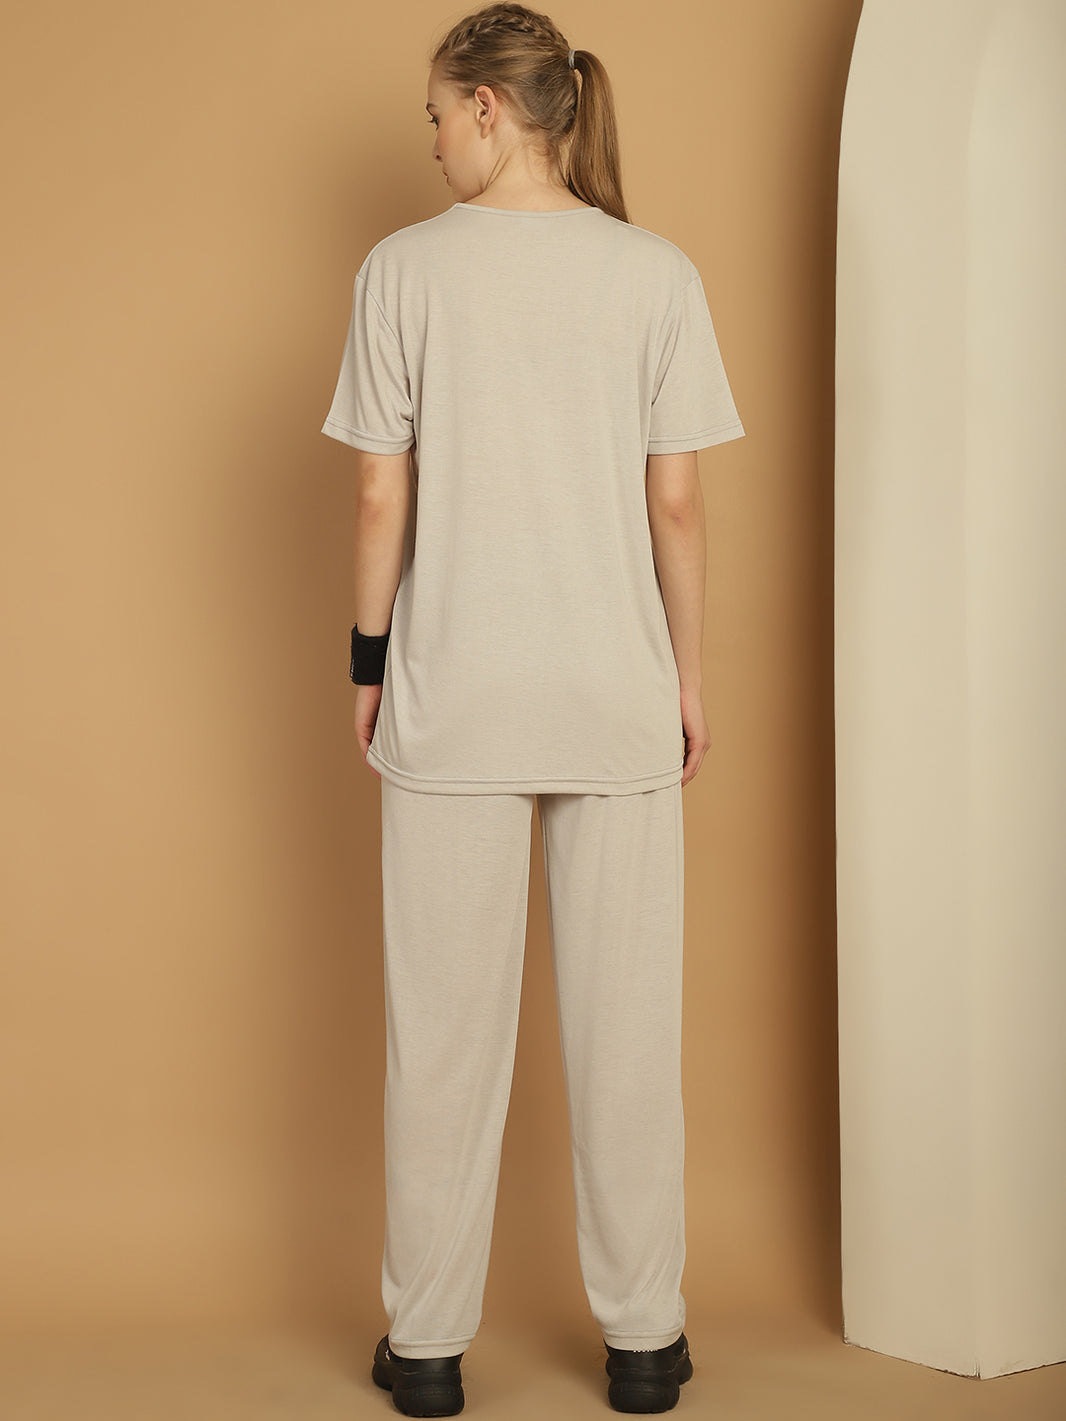 Vimal Jonney Printed  Light Grey Round Neck Cotton  Half sleeves Co-ord set Tracksuit For Women